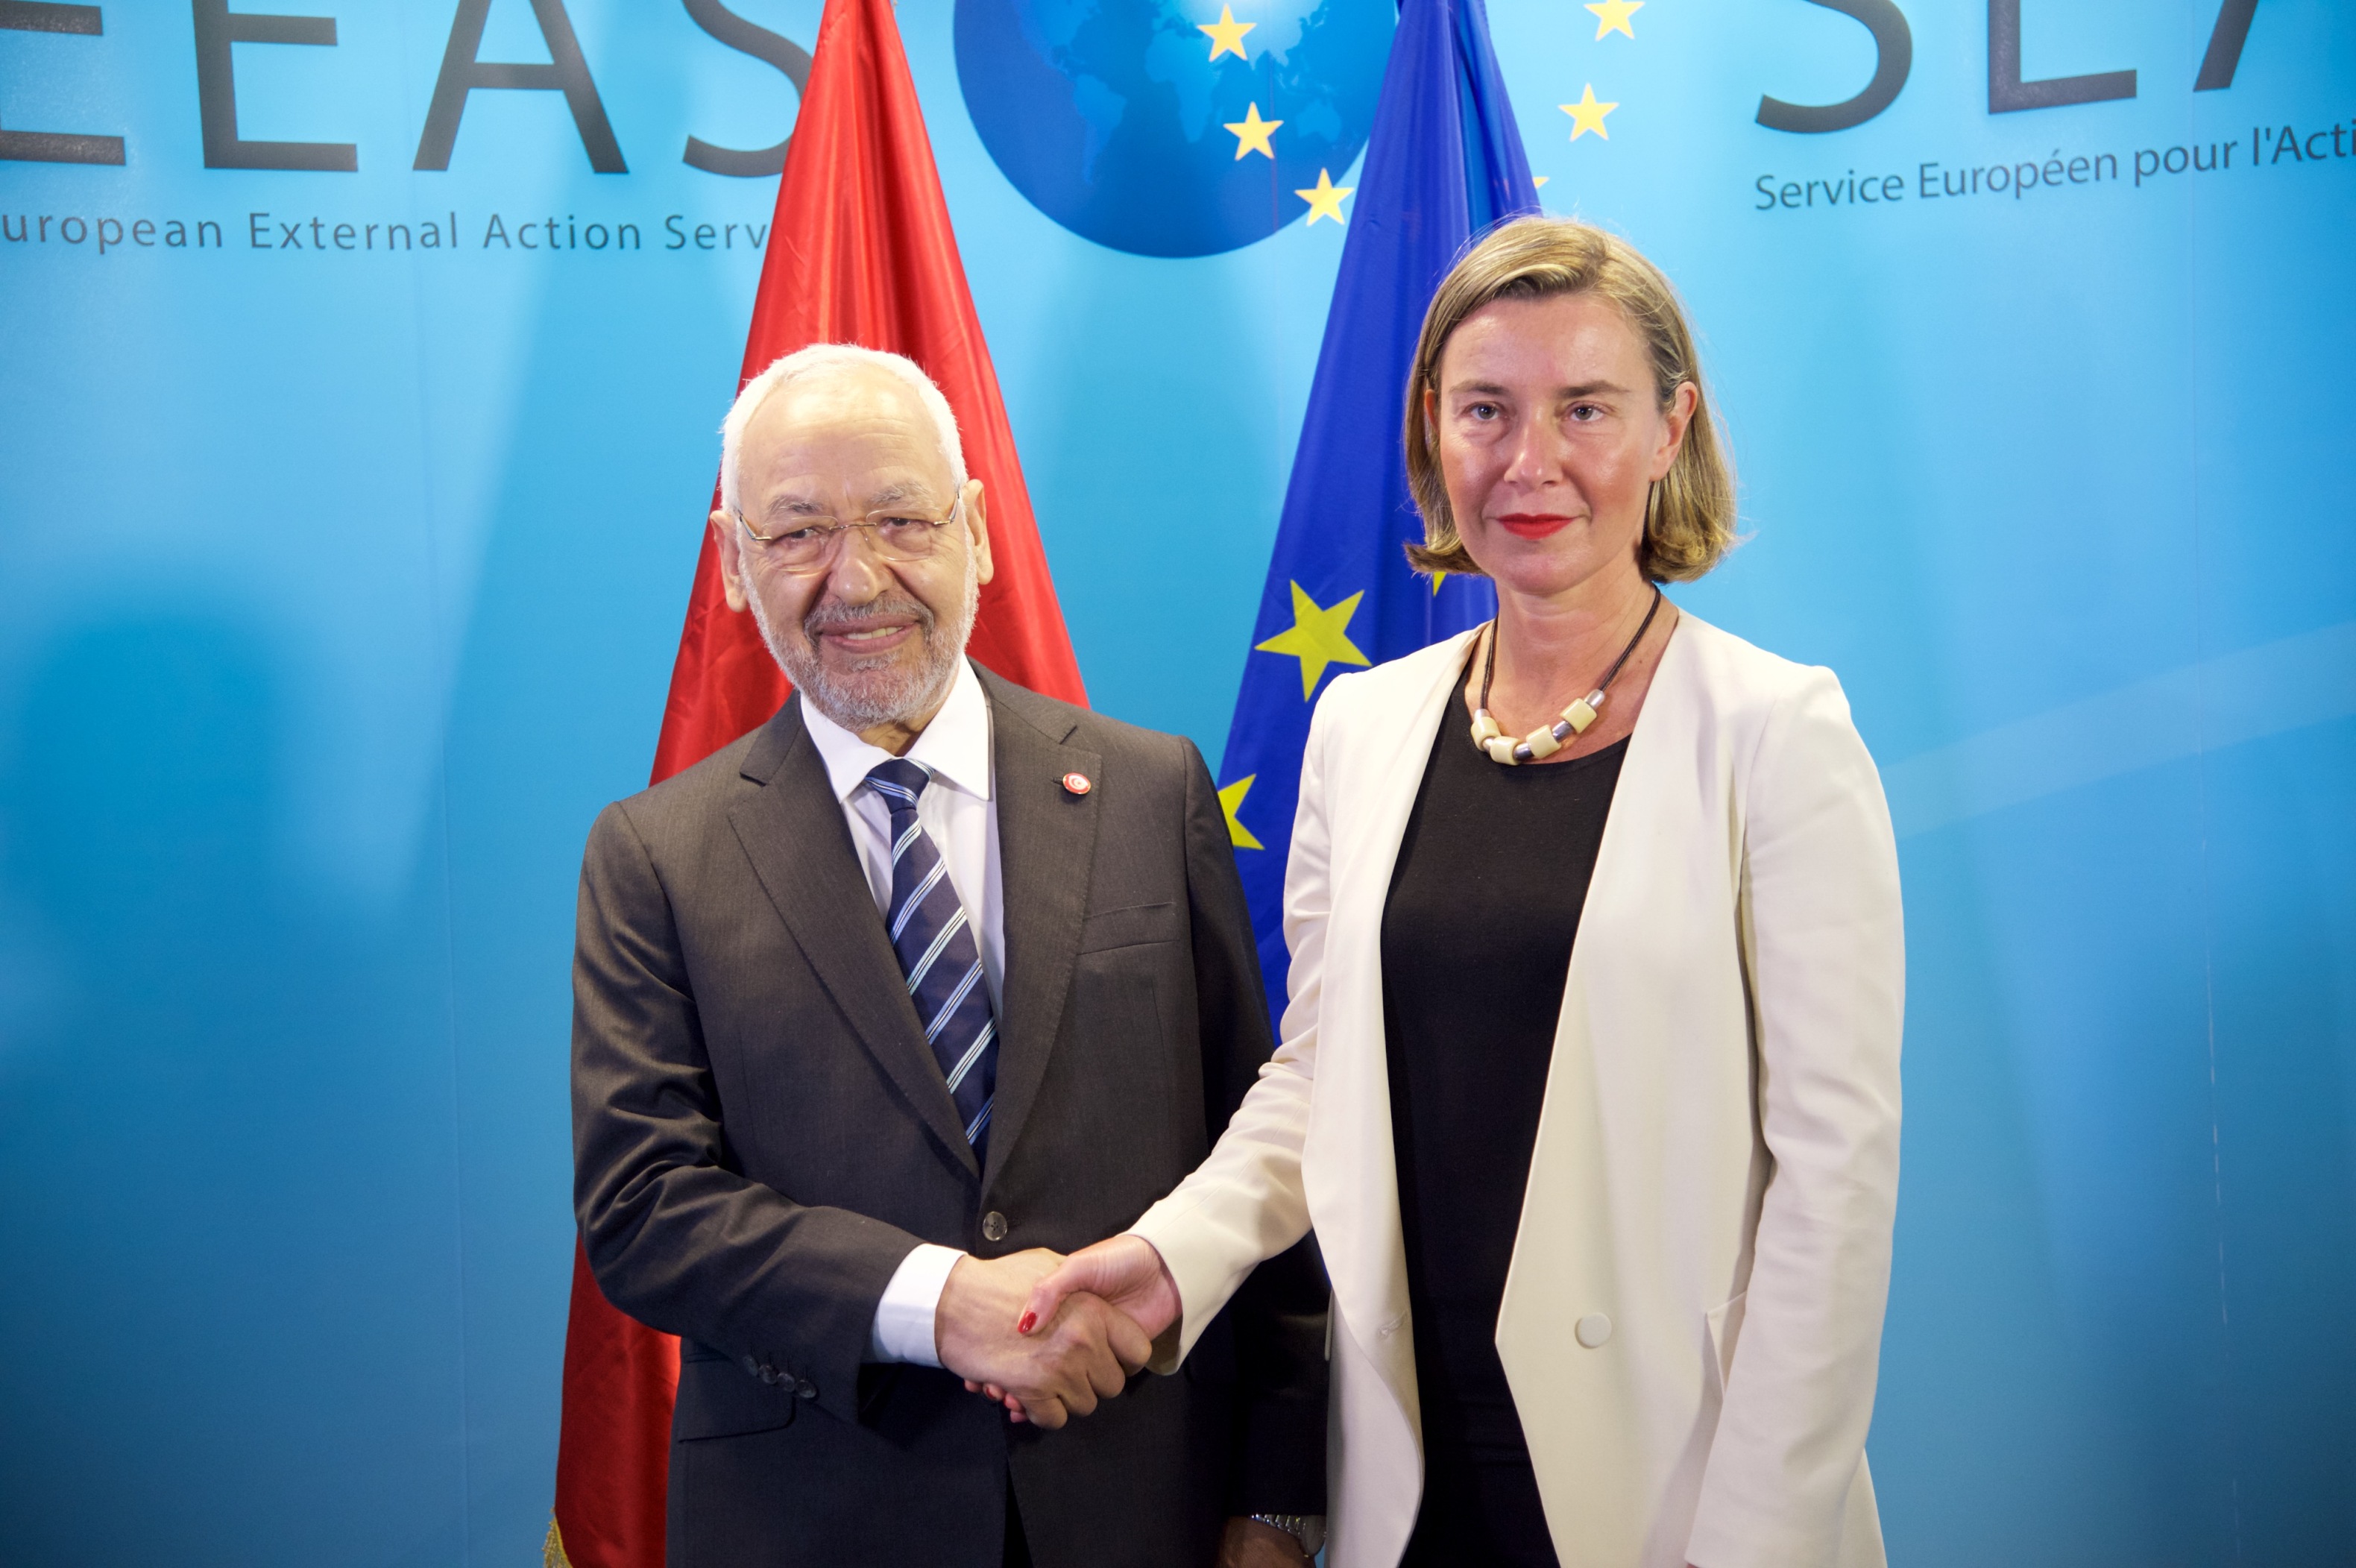 EU High Representative Federica Mogherini meets with Rached Ghannouchi